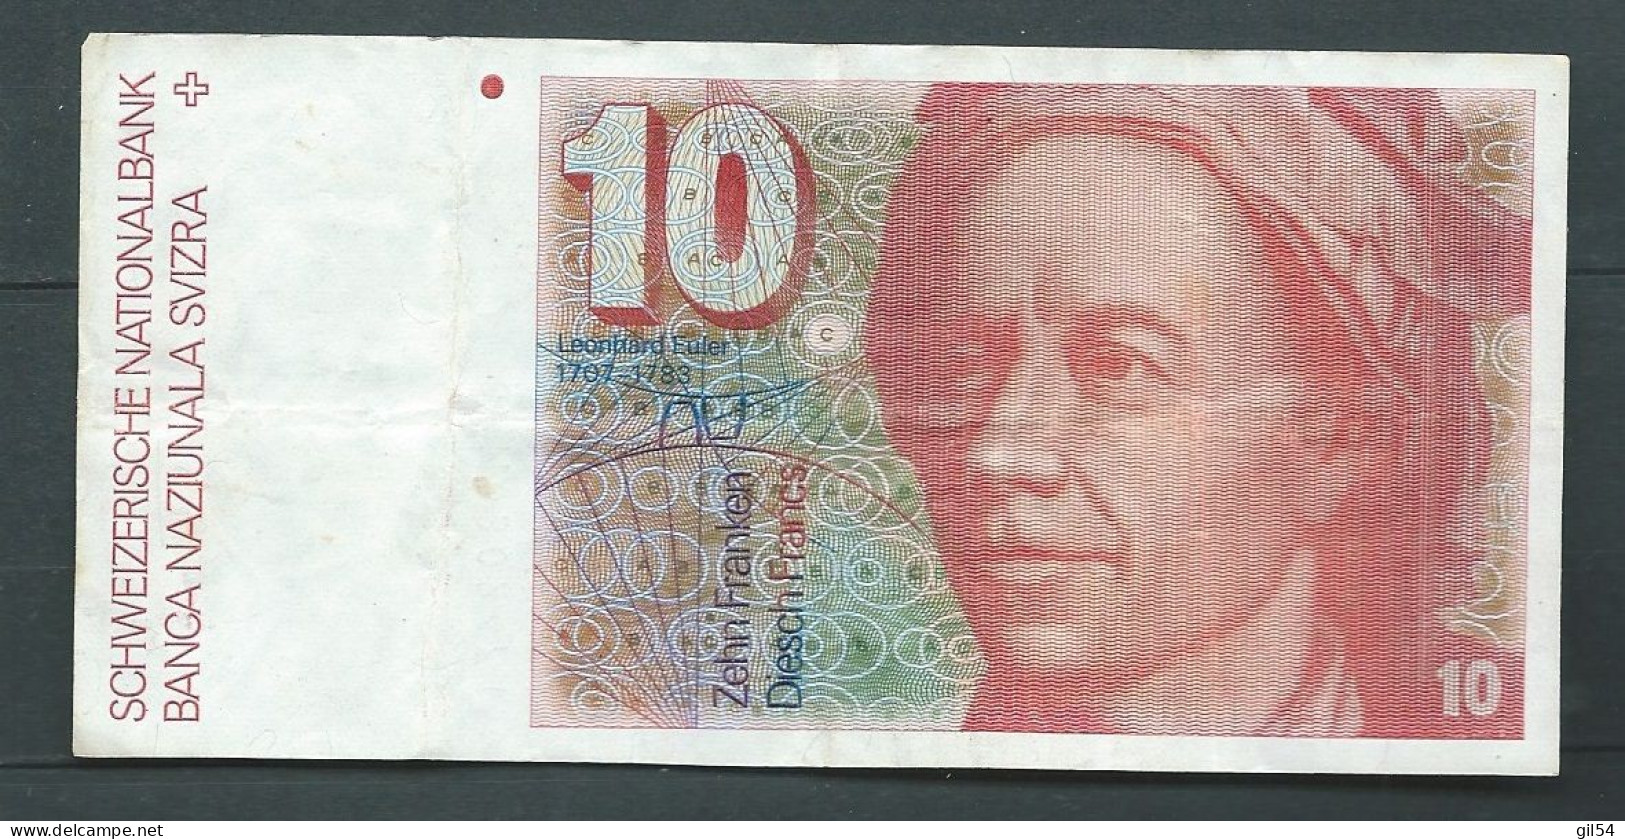 Billet 10 Francs 1987 Svizzera Suisse Schweiz 80M0302471  --  Laura14328 - Suisse